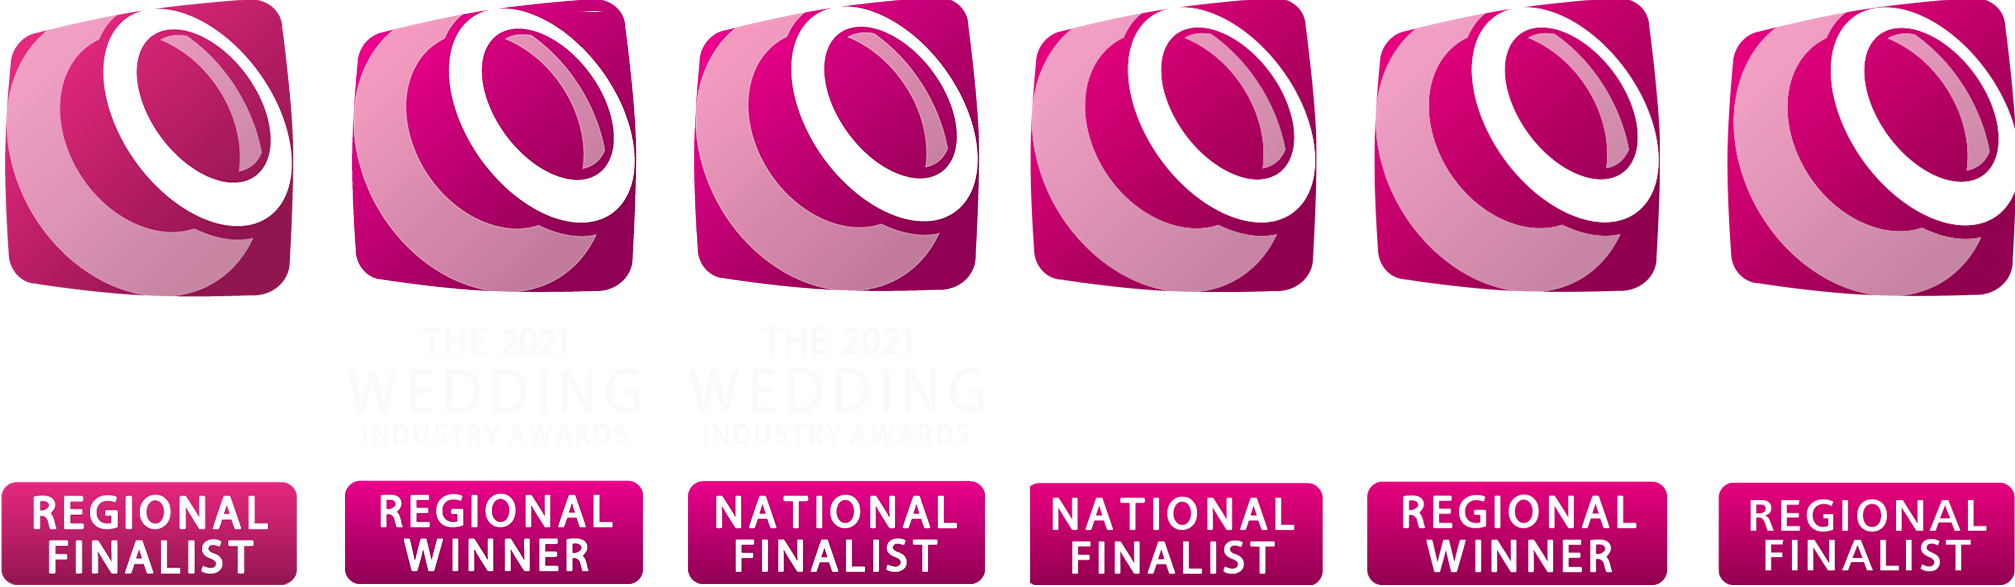 Wedding Industry Awards 2020 Regional Finalist